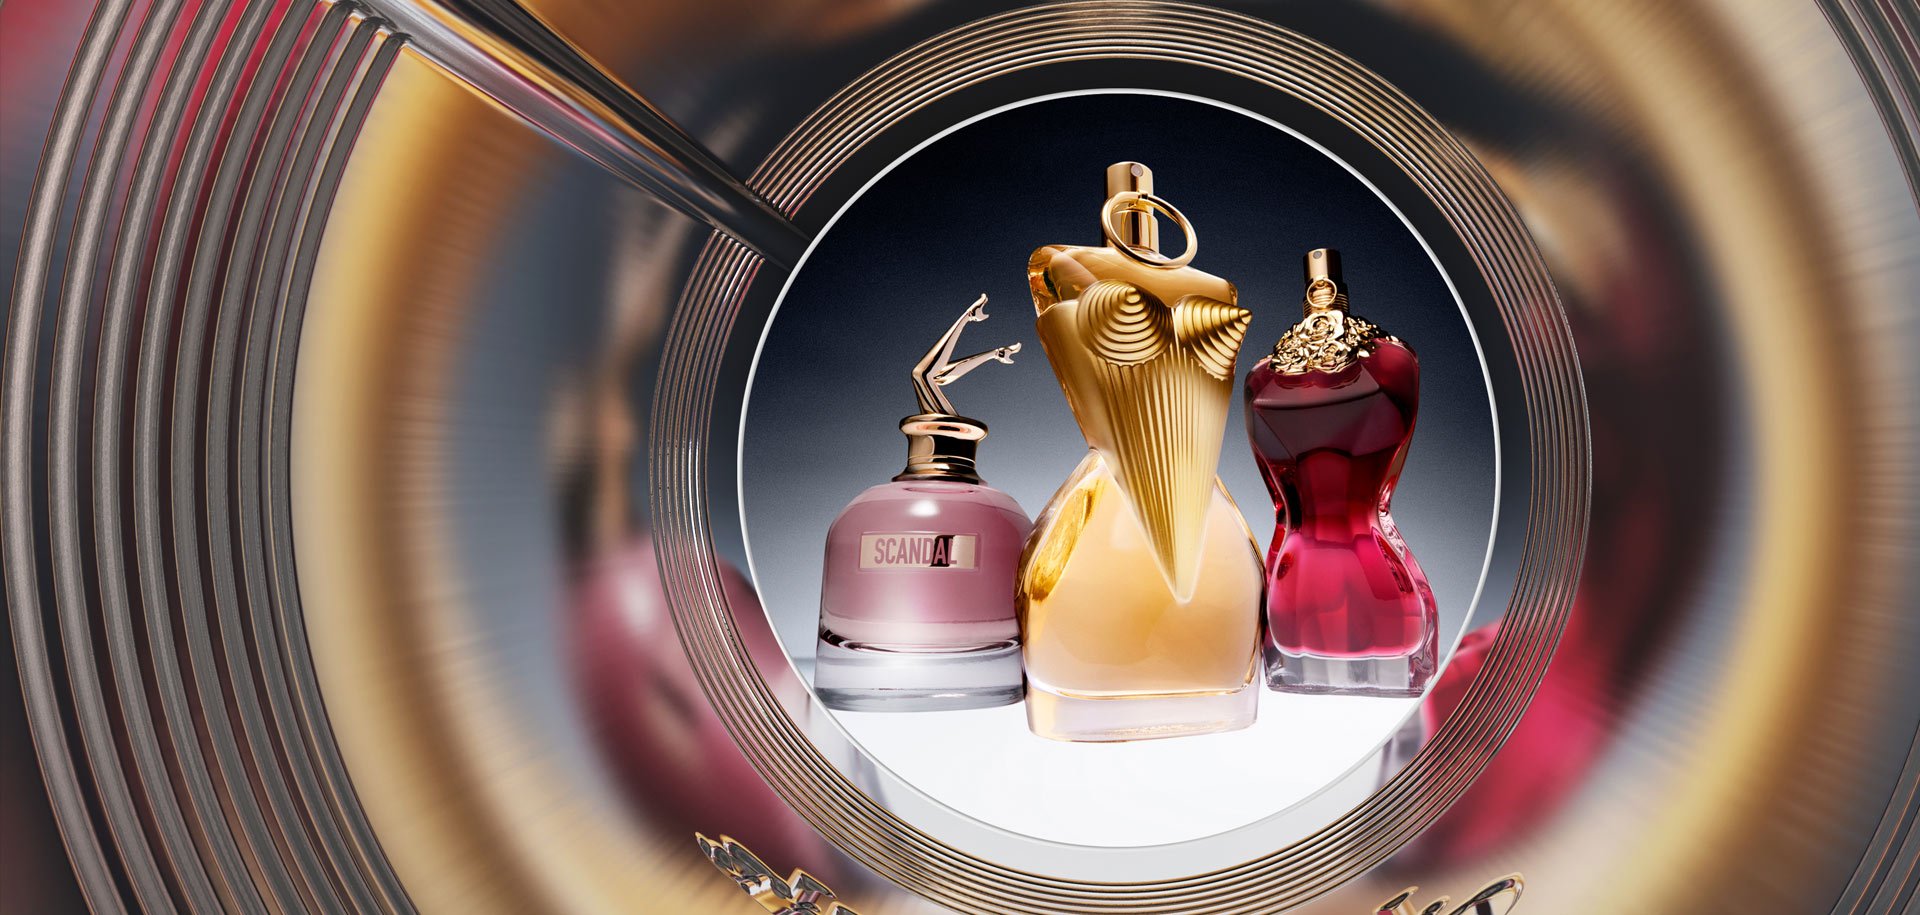 Women's Perfume